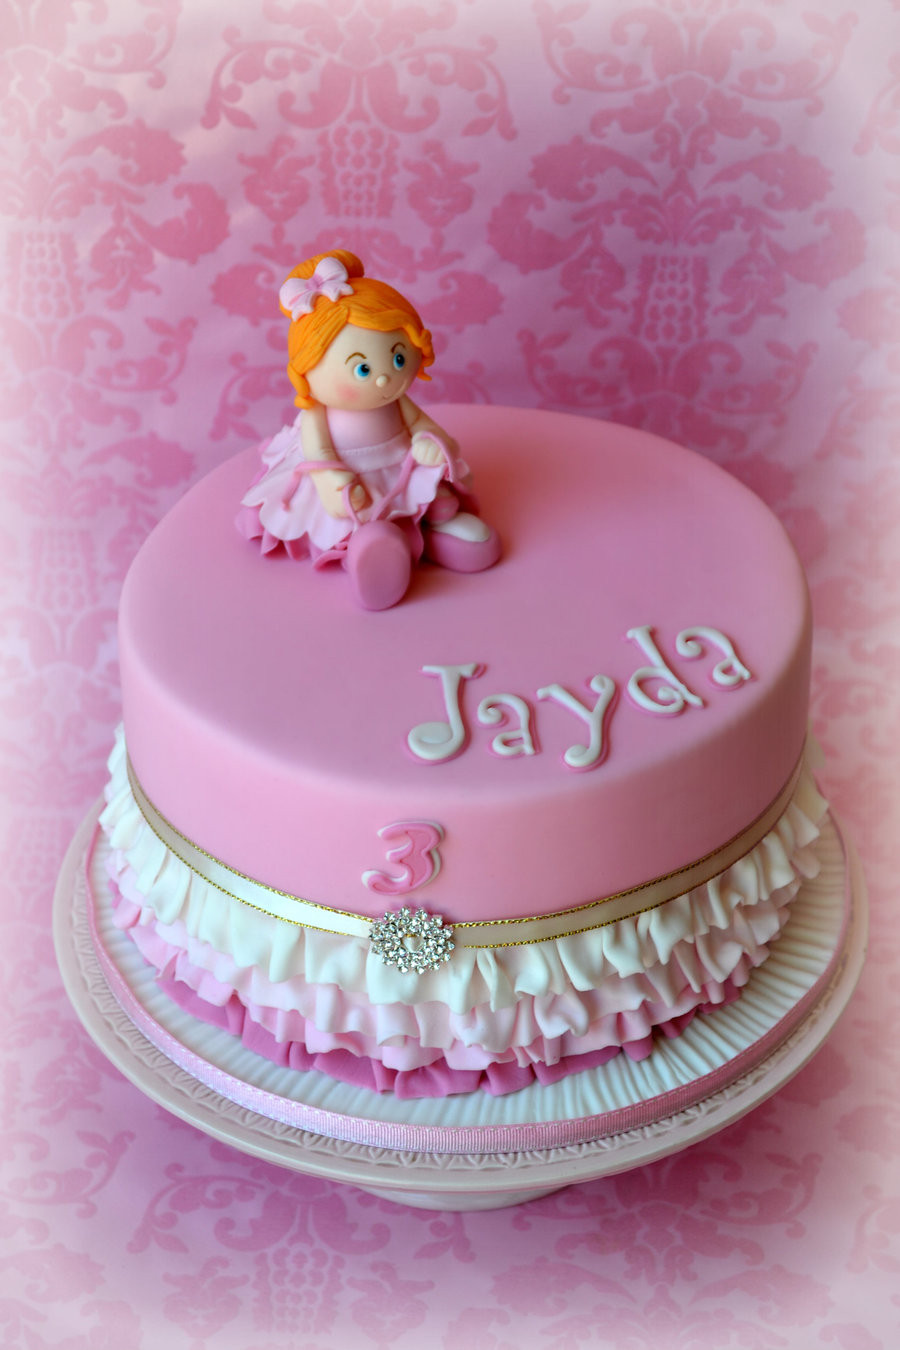 Little Girl Birthday Cakes
 Birthday Cake For A Little Girl Who Loves To Dance The